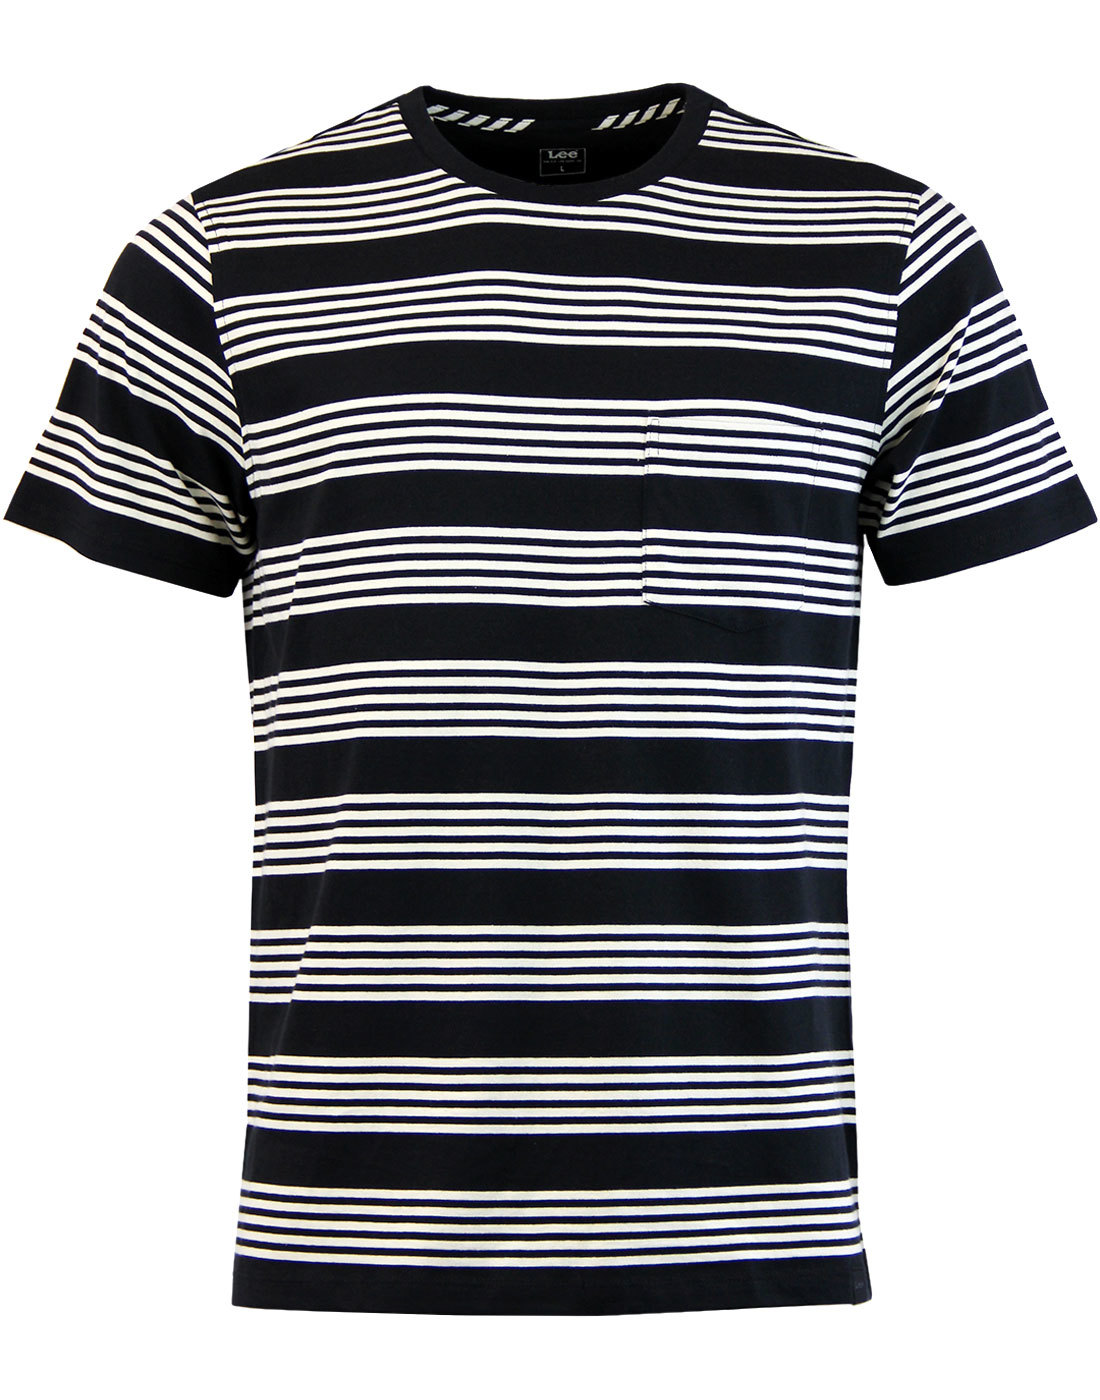 LEE Retro Indie Mod Block Stripe Pocket T-Shirt in Black